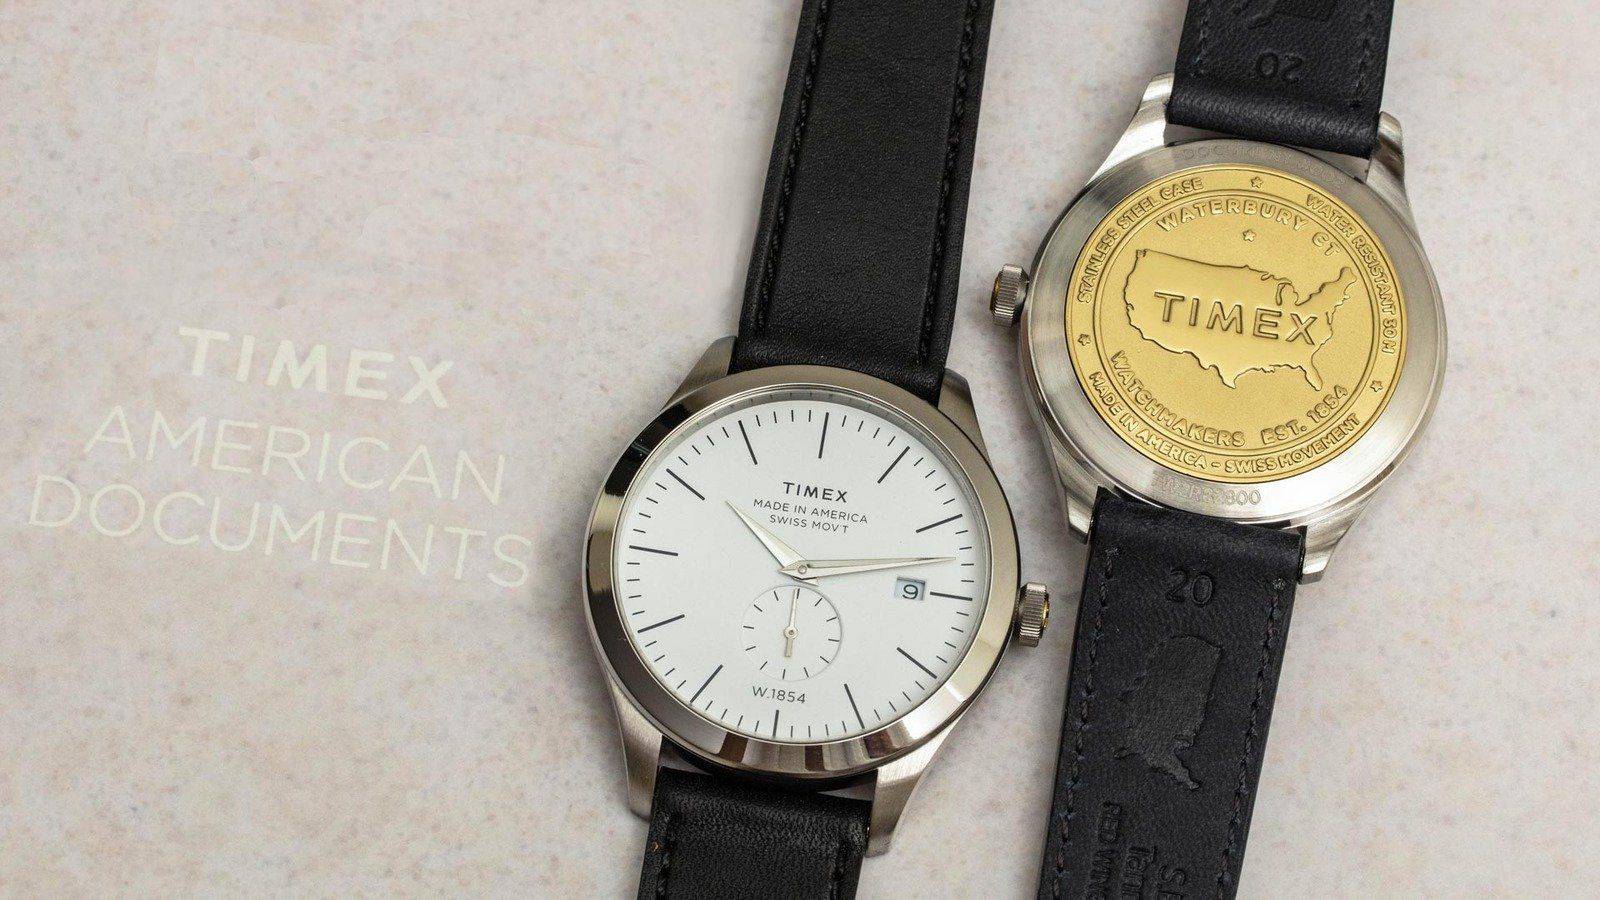 Timex-American-Documents-1.jpg